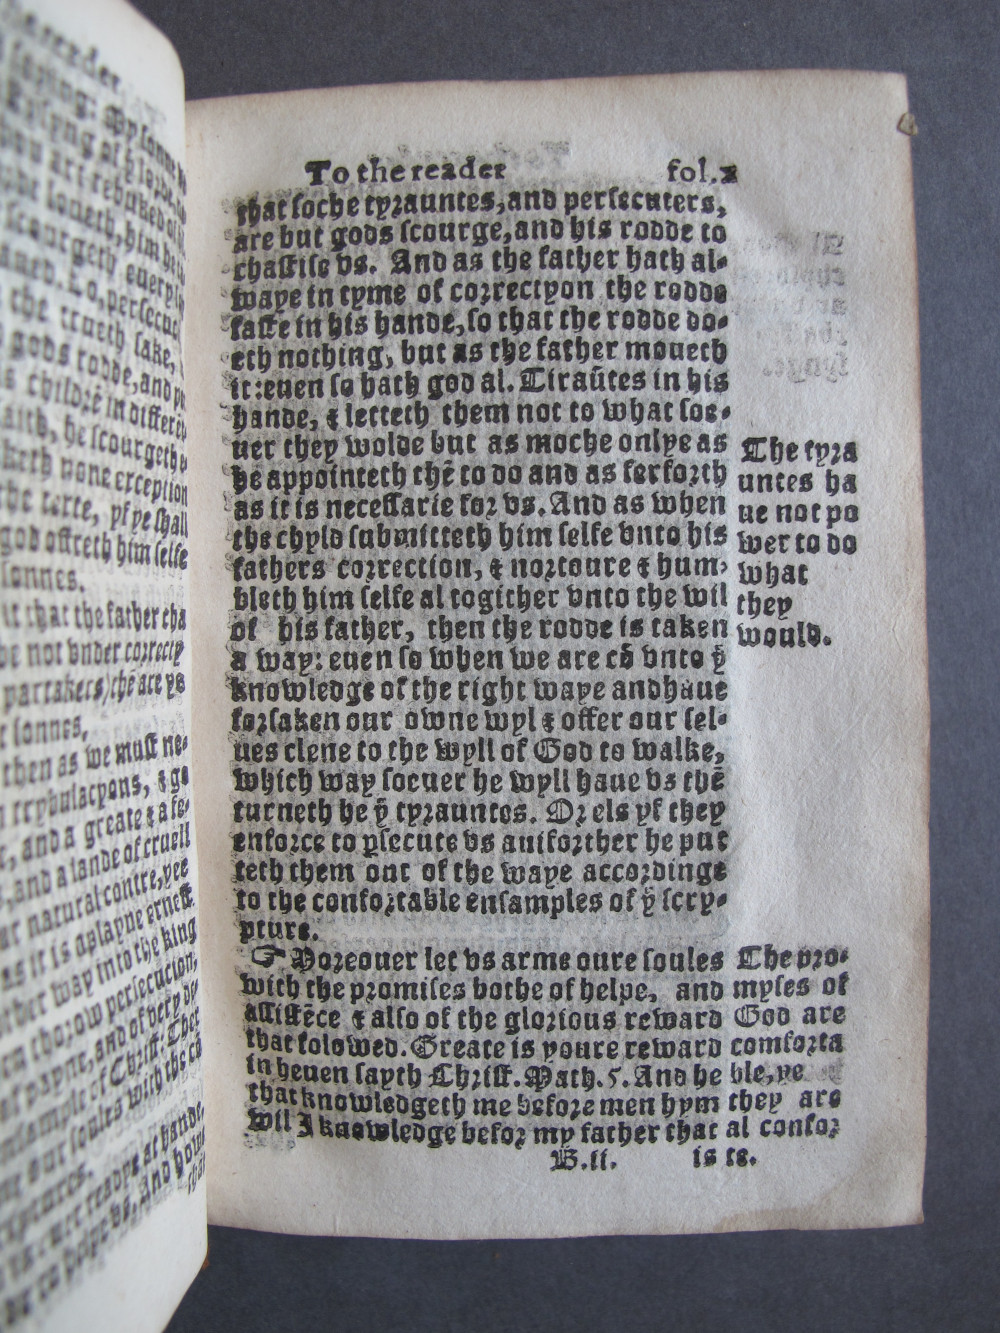 1 Folio B2 recto